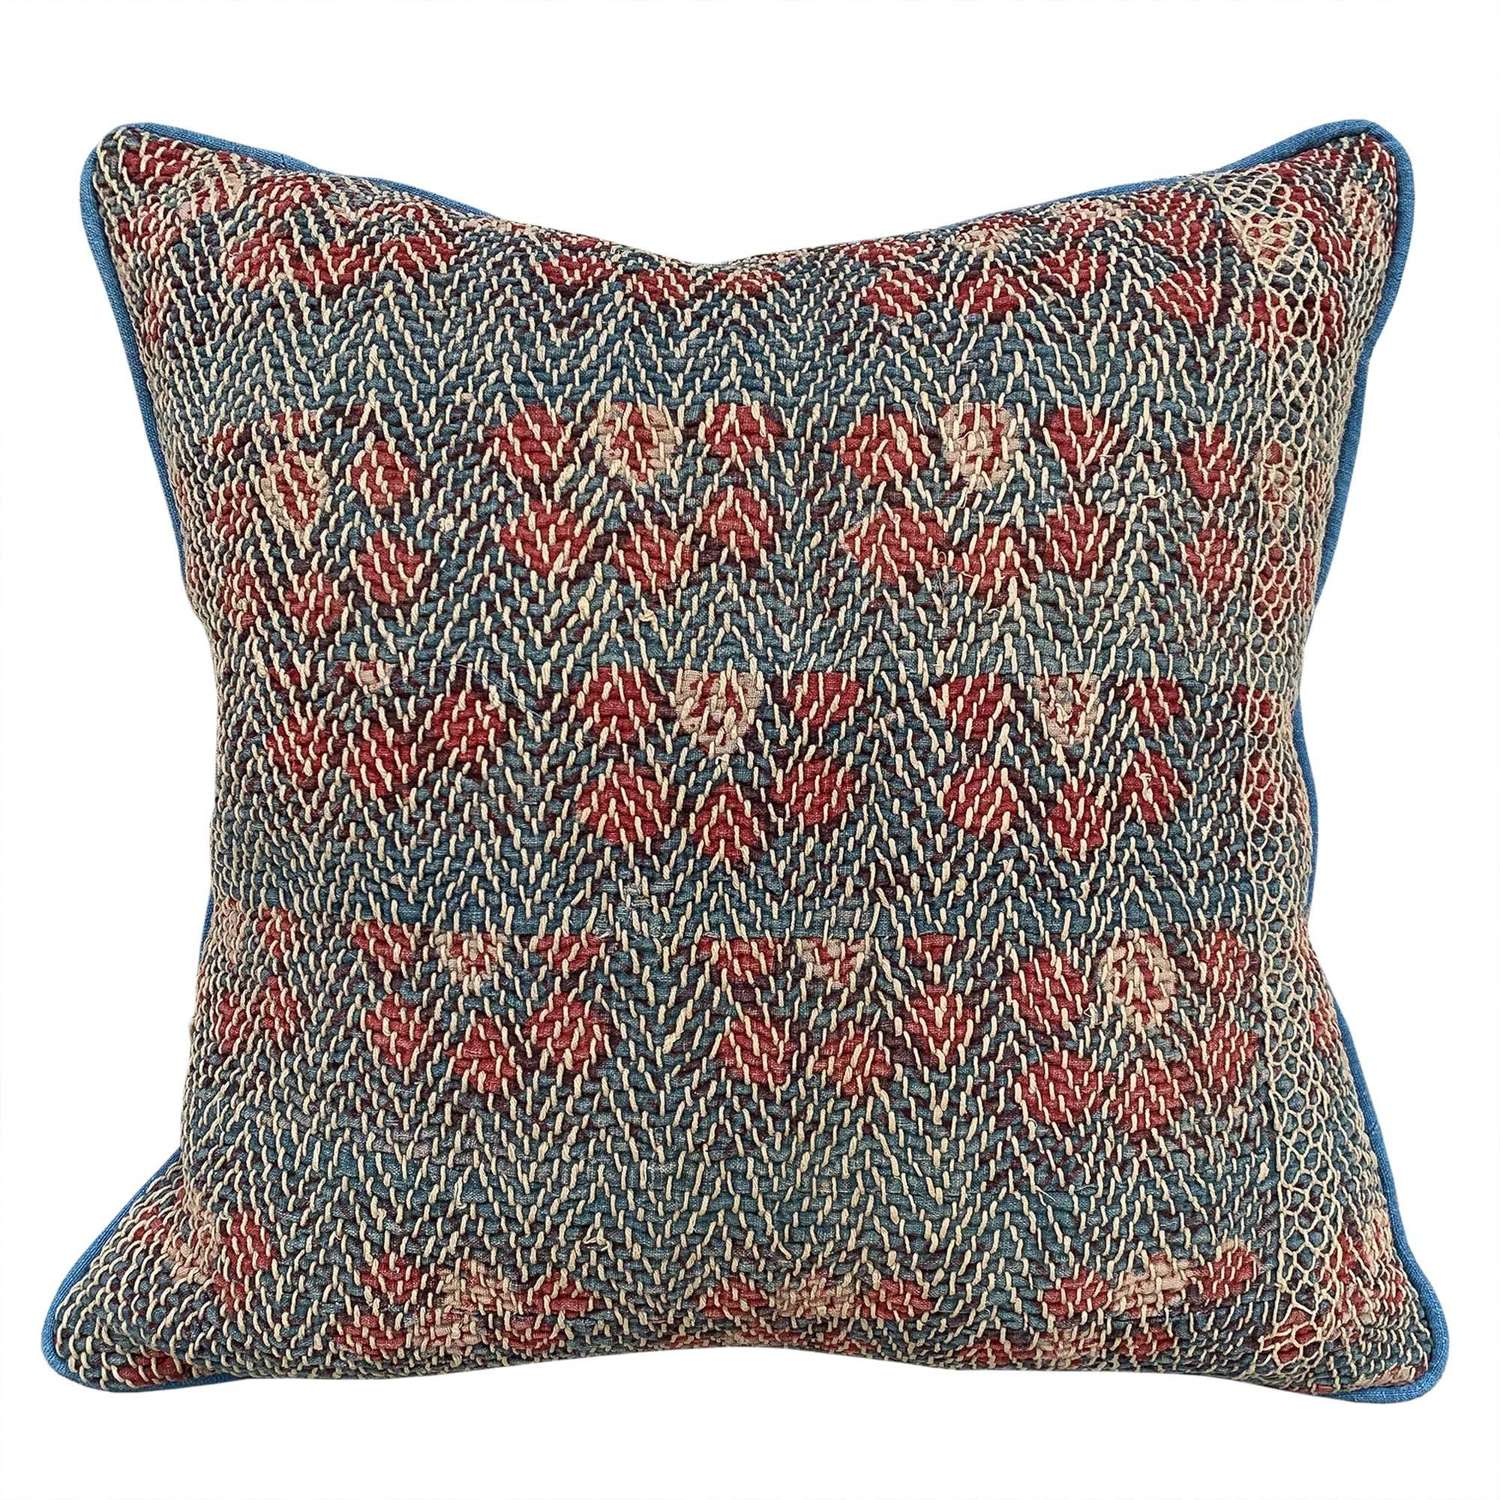 Pale indigo Banjara cushions